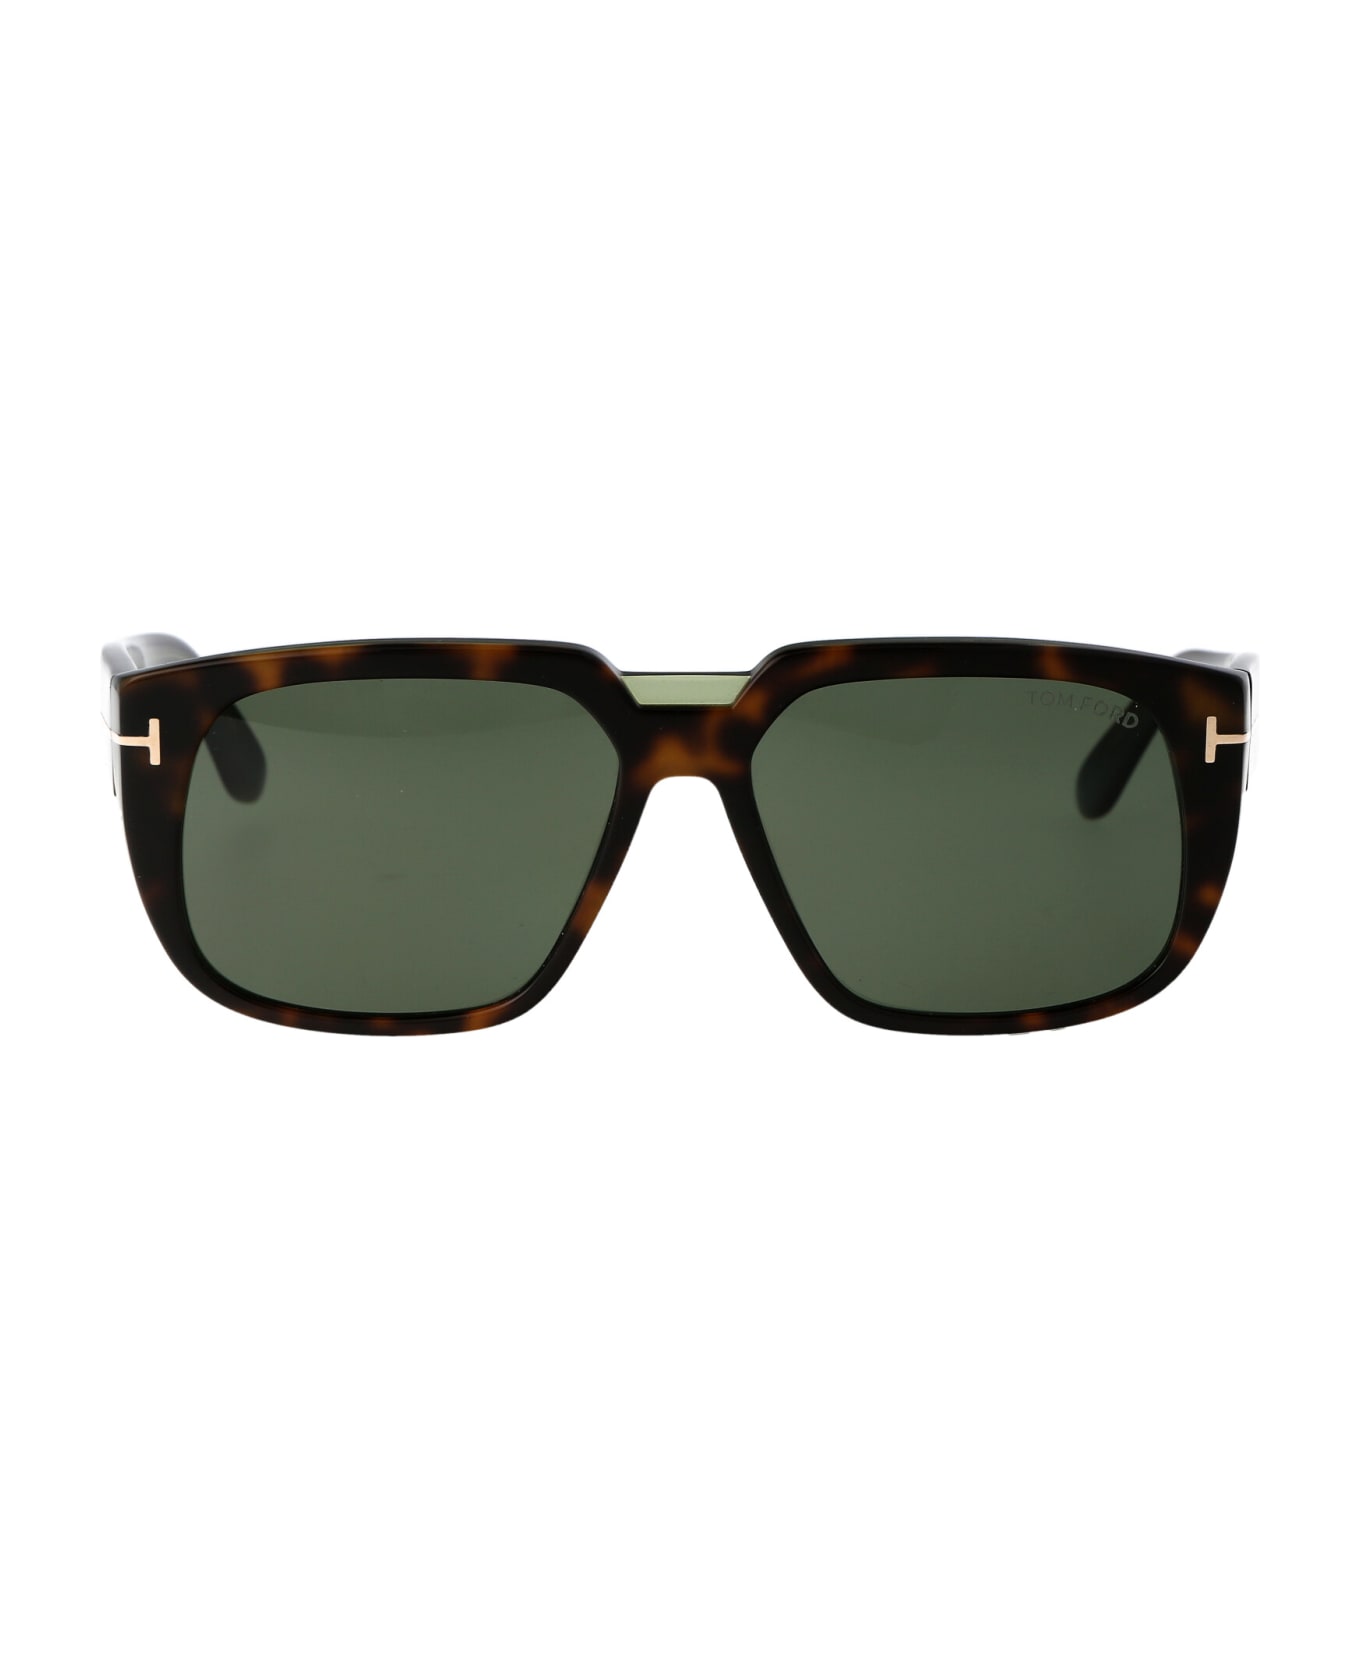 Tom Ford Eyewear Oliver-02 Sunglasses - 56Dunhill Ferry tortoiseshell rectangular sunglasses